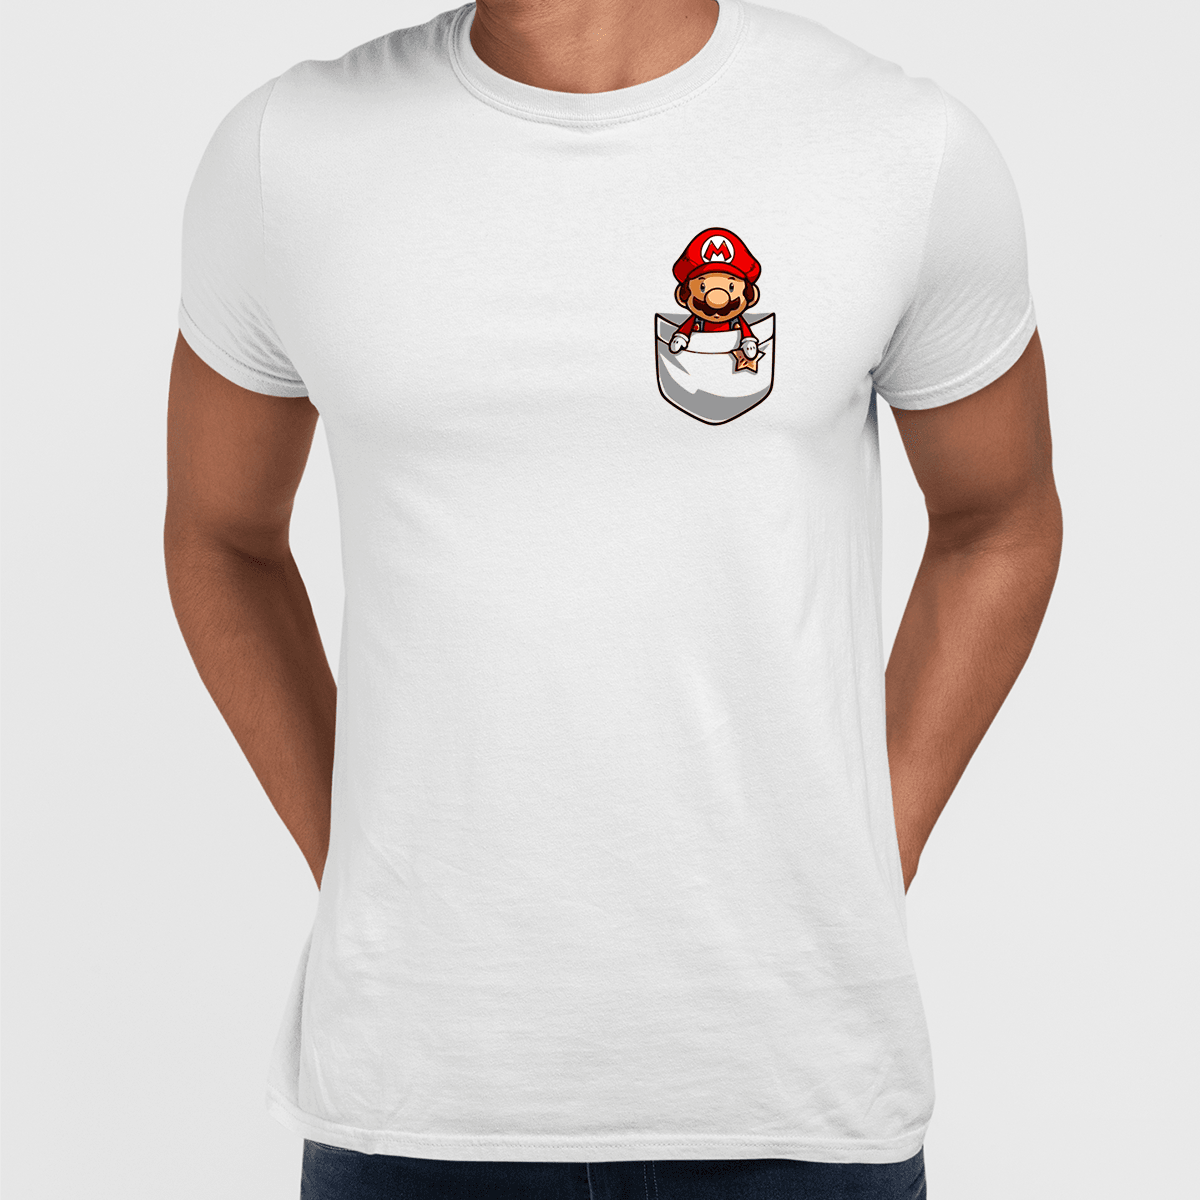 Cute Super Mario in the pocket Tee Nintendo SNES for All retro Minds - Kuzi Tees